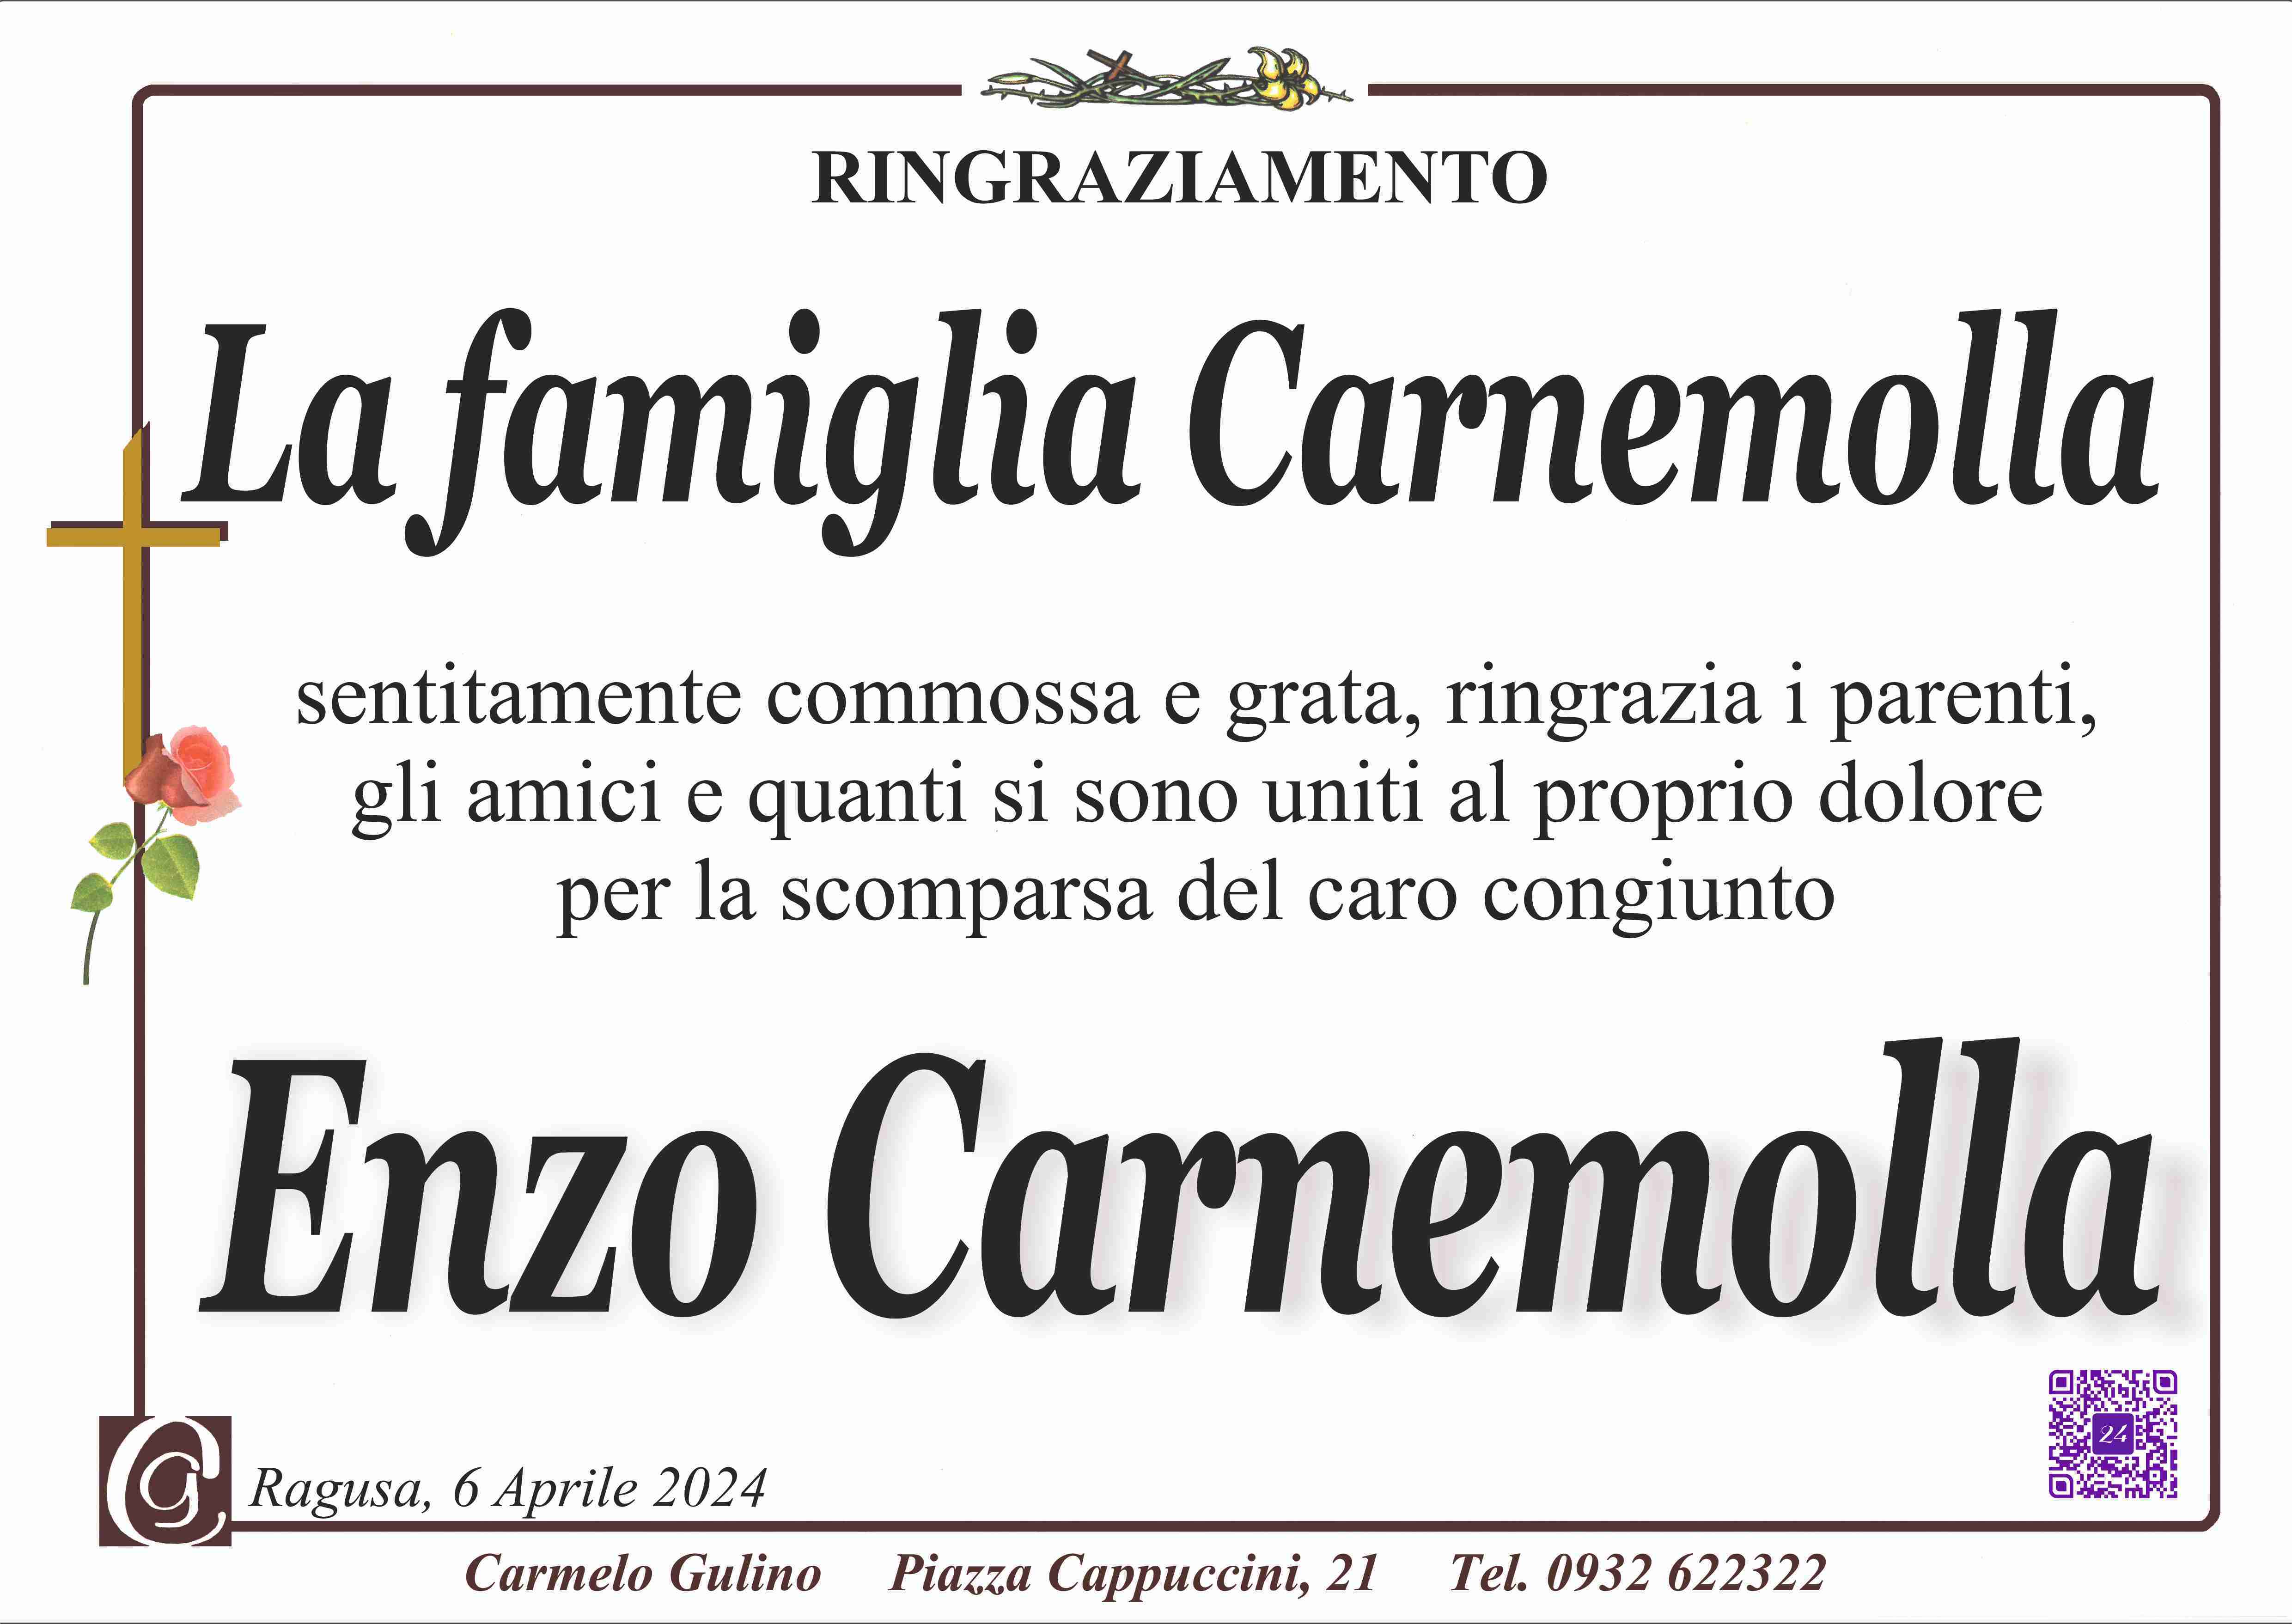 Vincenzo Carnemolla